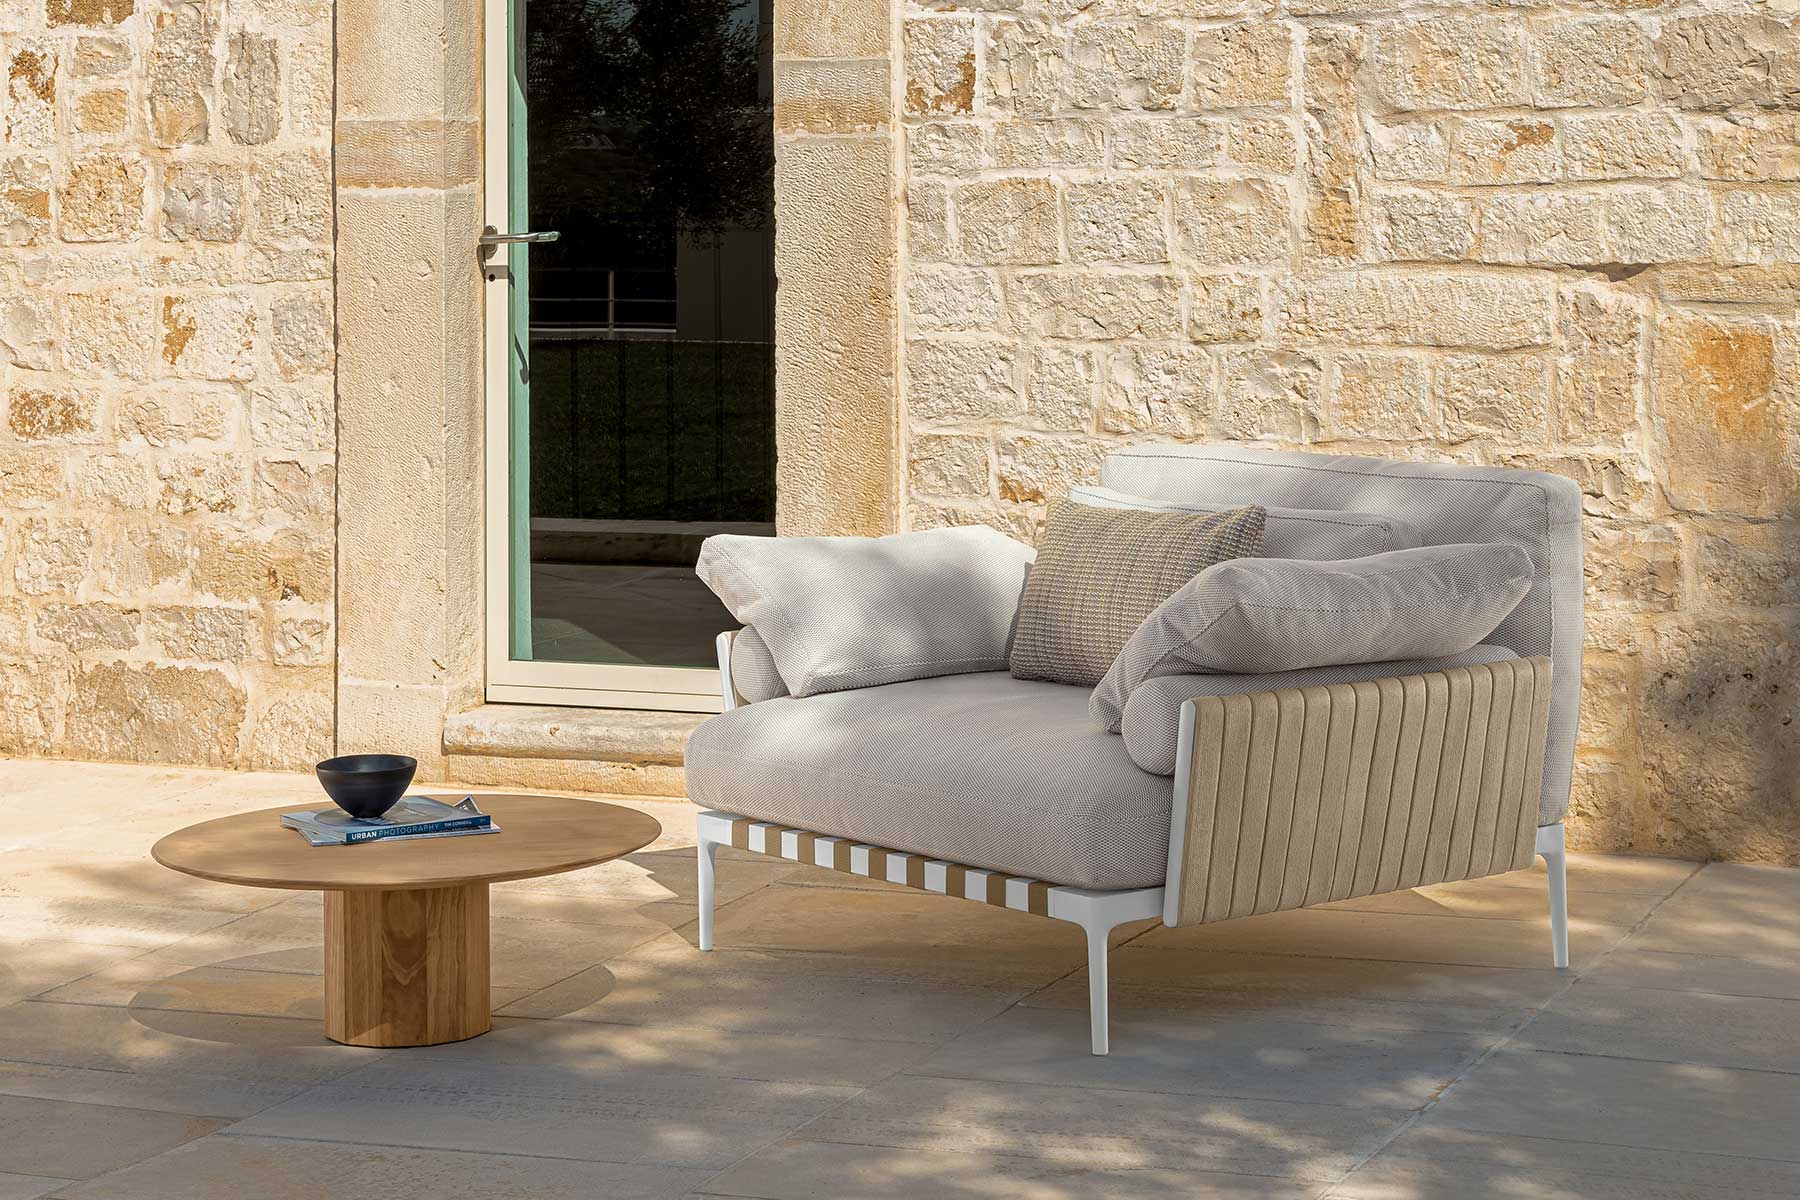 San José beige garden lounge set - Shop Online | Italy Dream Design